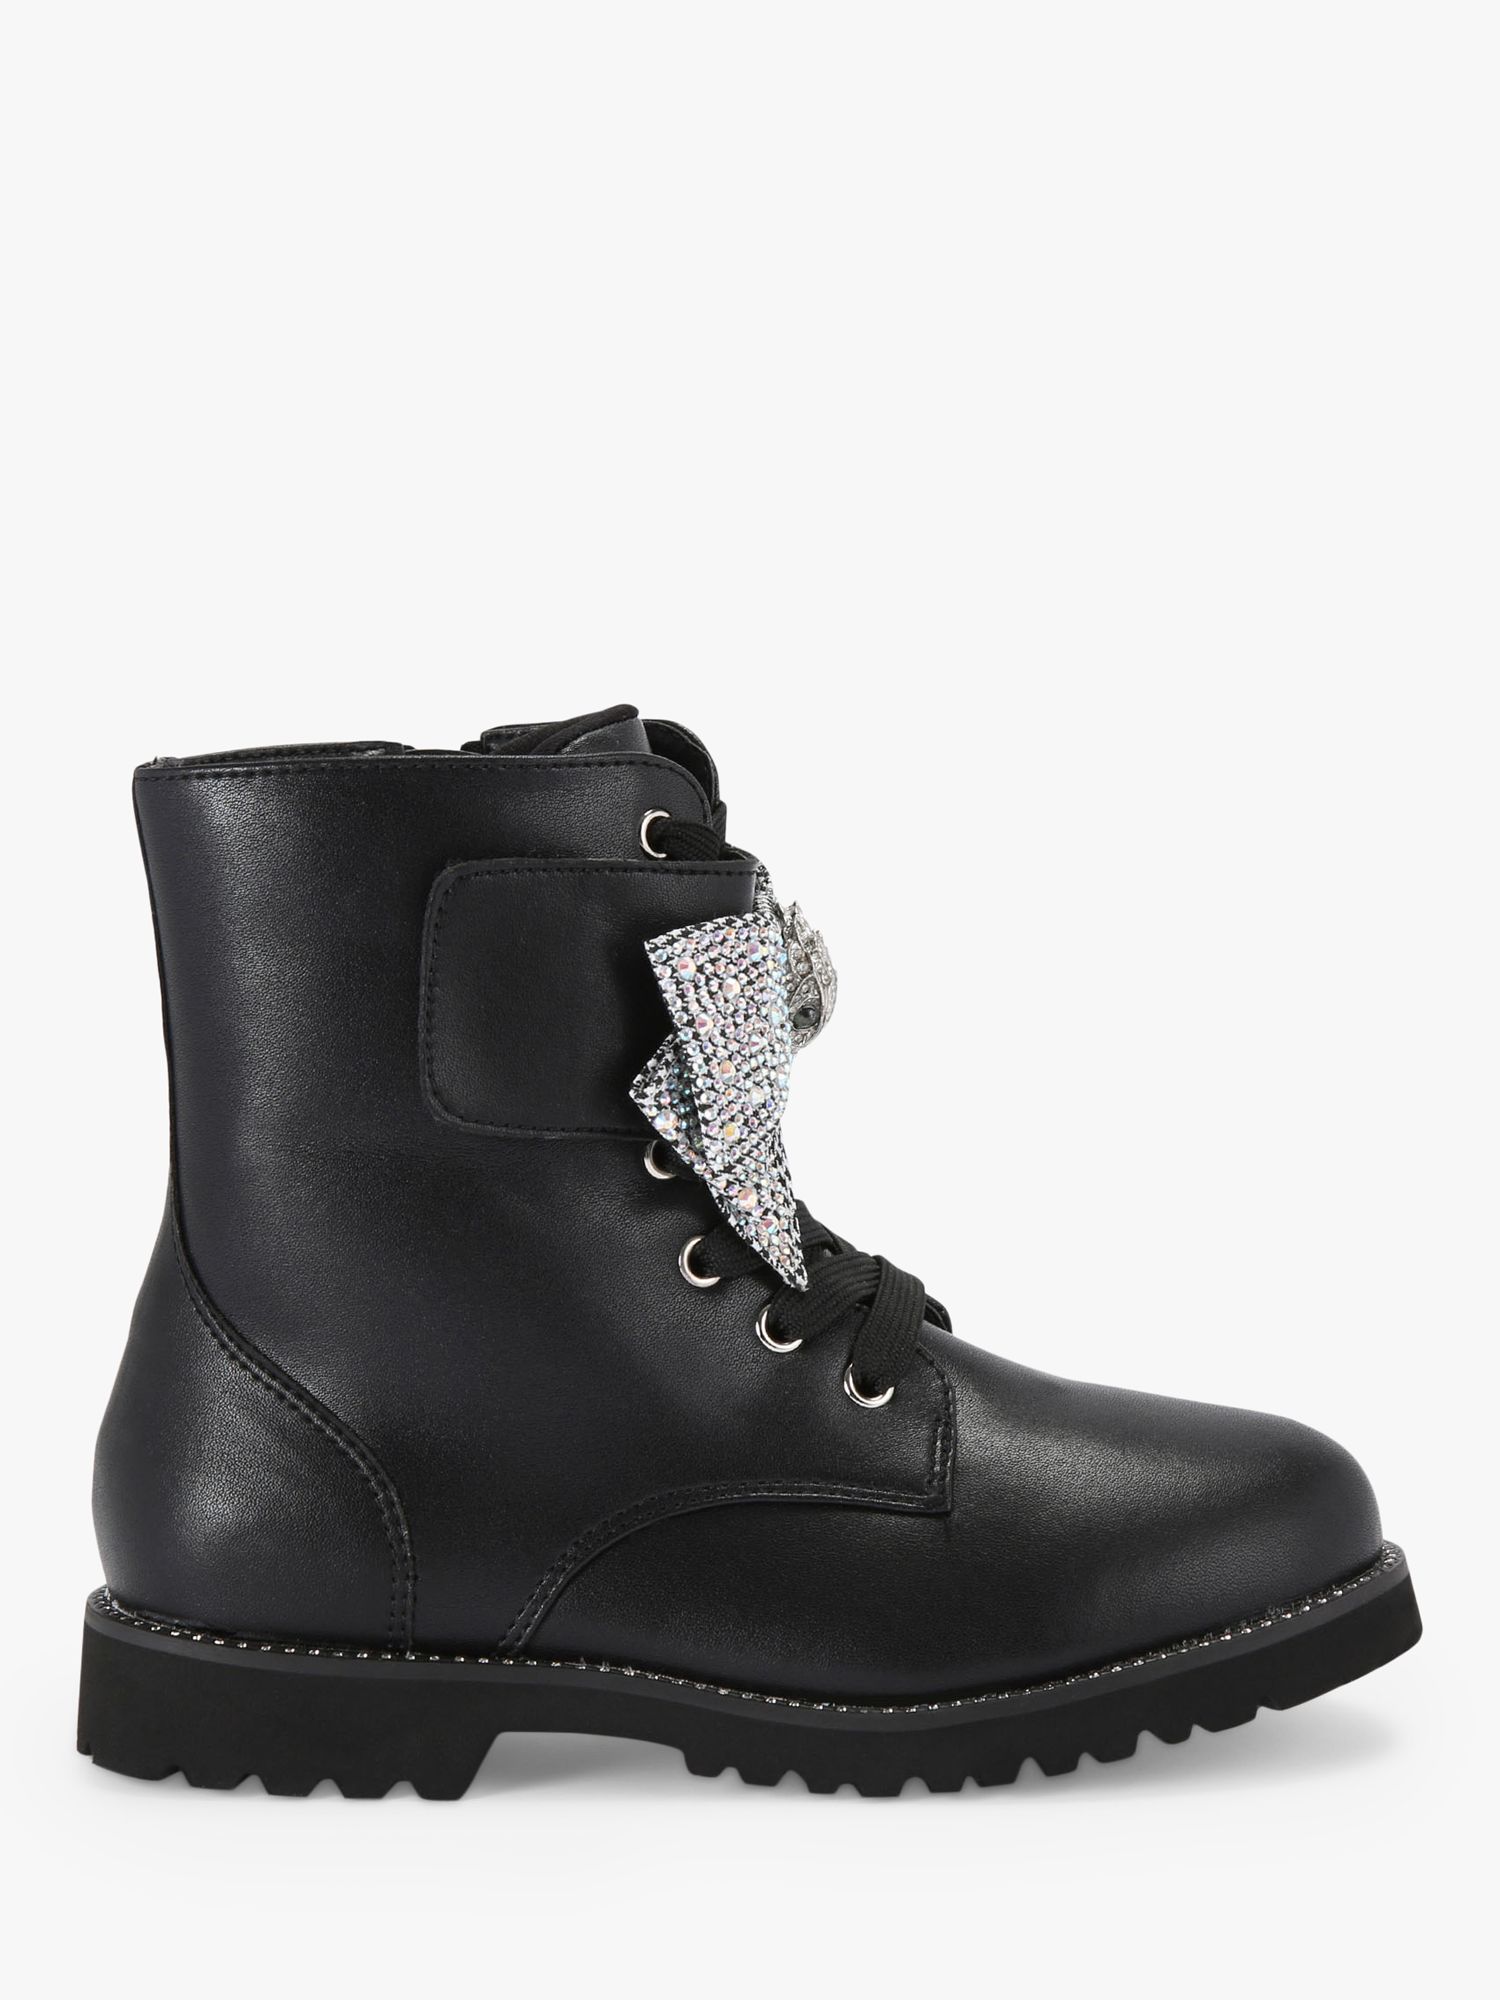 Kurt Geiger London Kids' Kensington Leather Strap Bow Ankle Boots, Black, 2